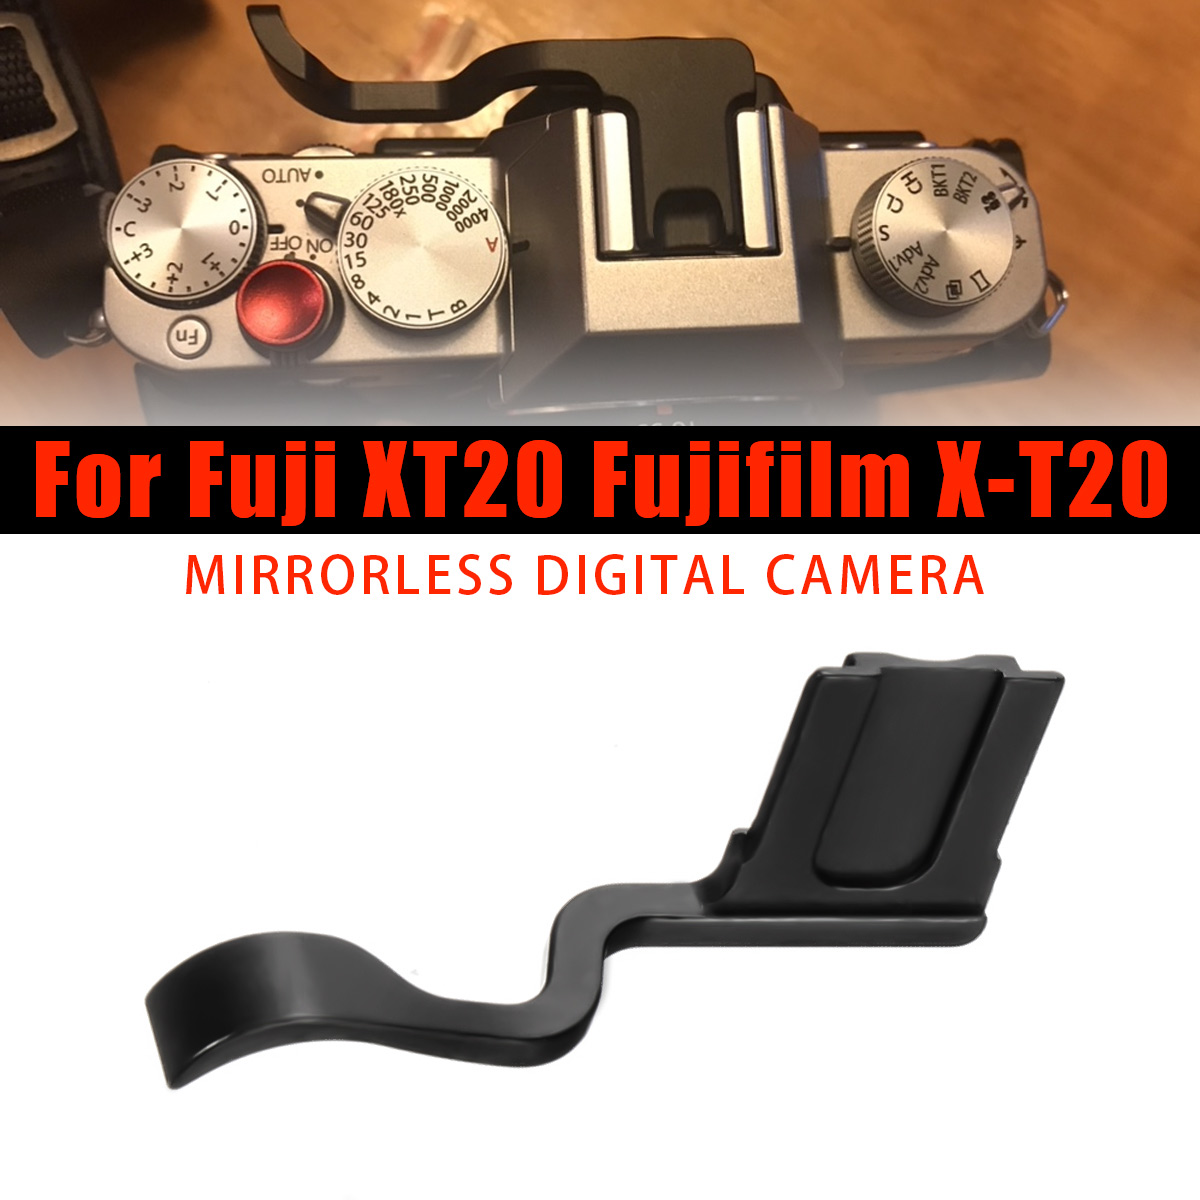 Durable Thumb Rest Grip Replacement Accessories For Fuji Fujifilm XT20 Mirrorless Digital Camera